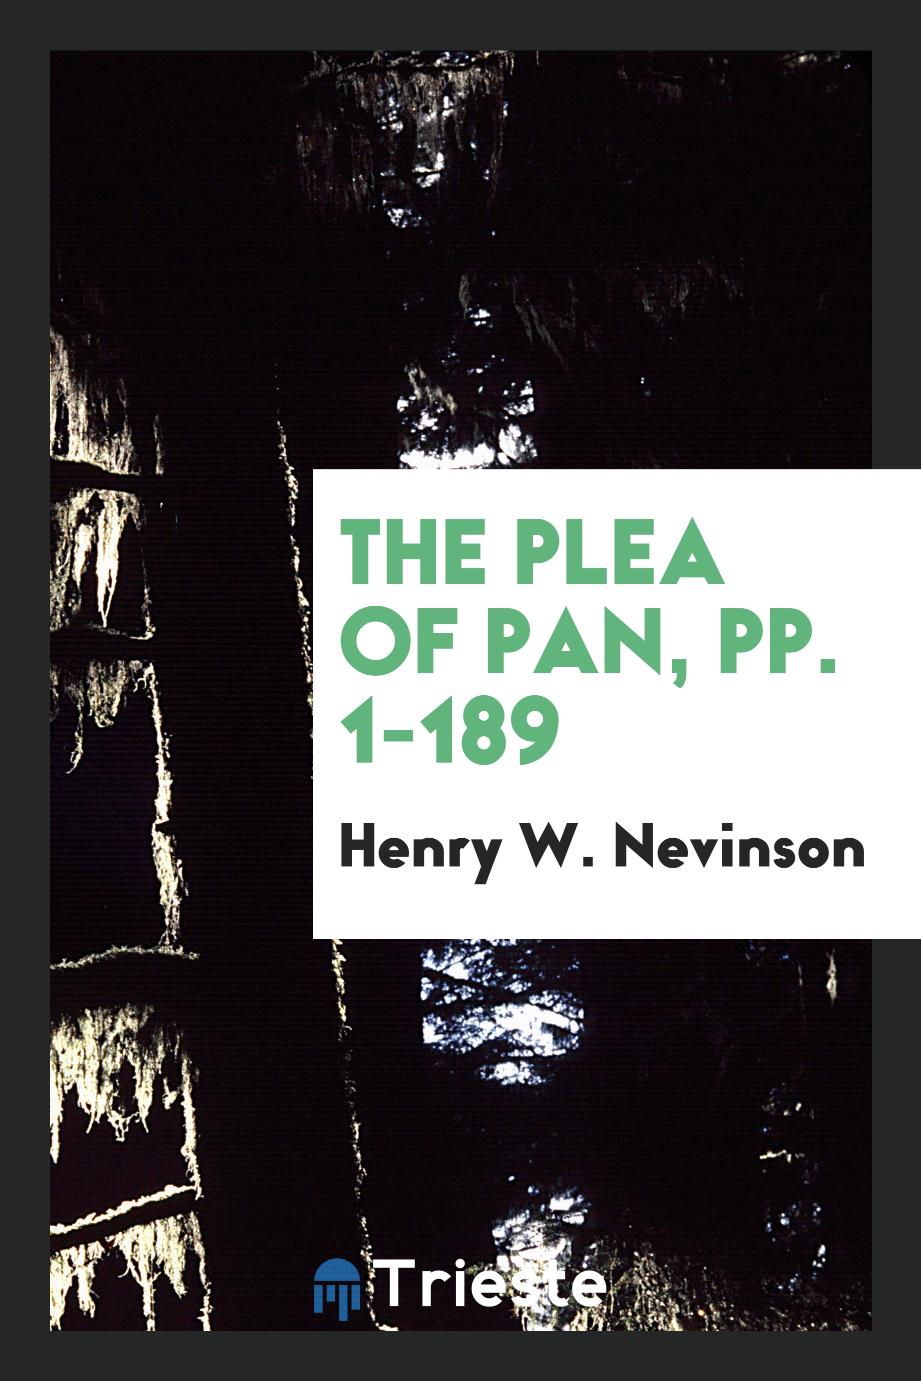 The Plea of Pan, pp. 1-189